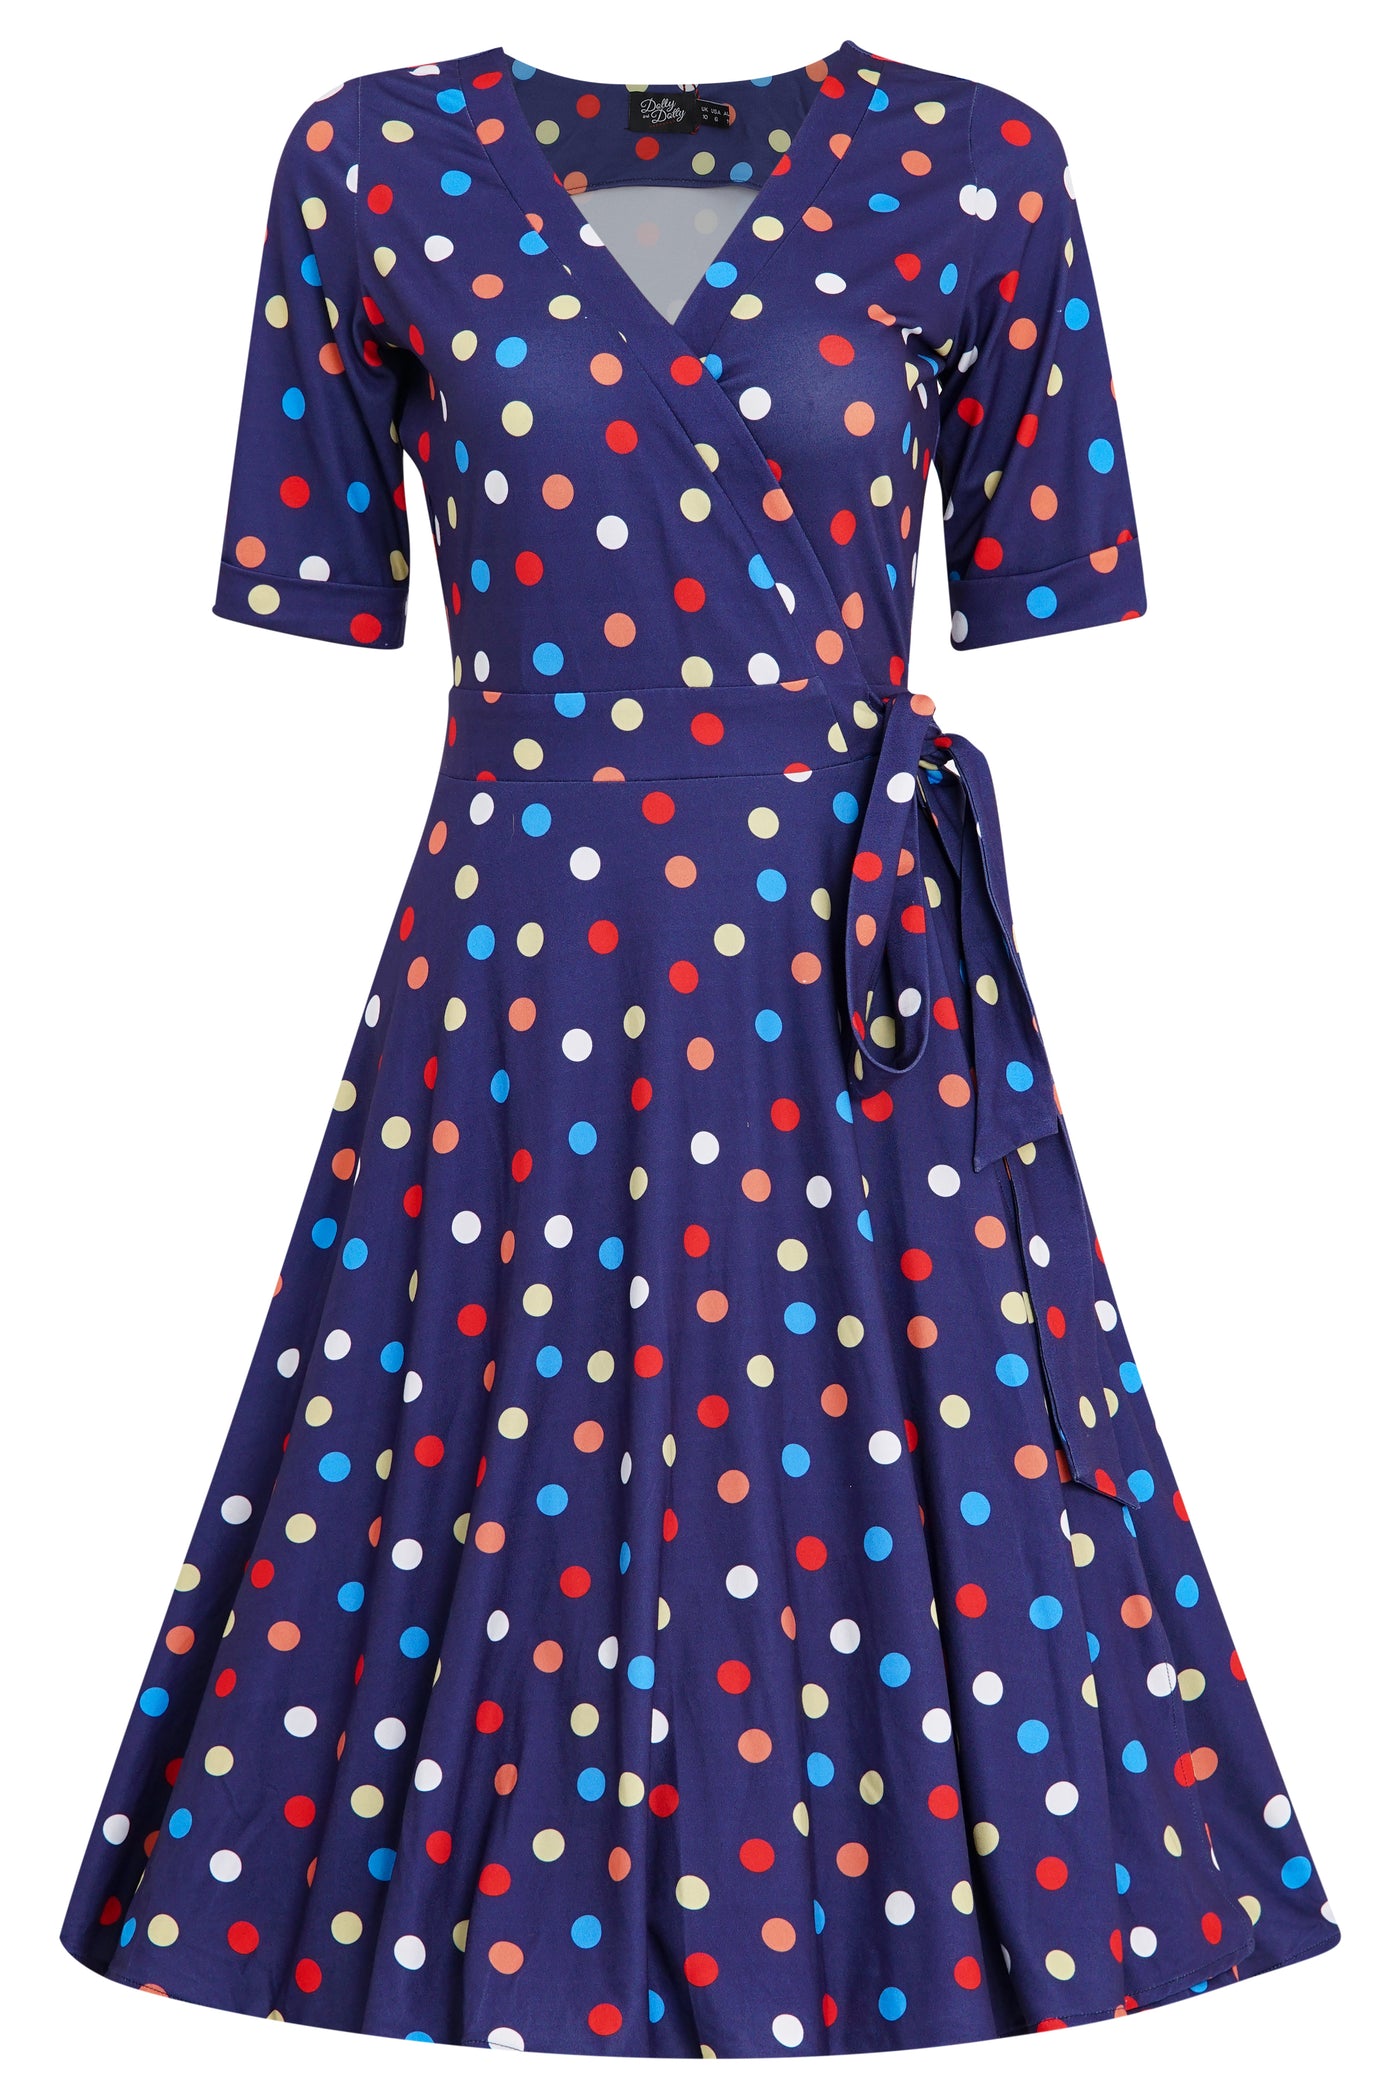 Woman's Colourful Polka Dot Knit Wrap Dress in Dark Blue